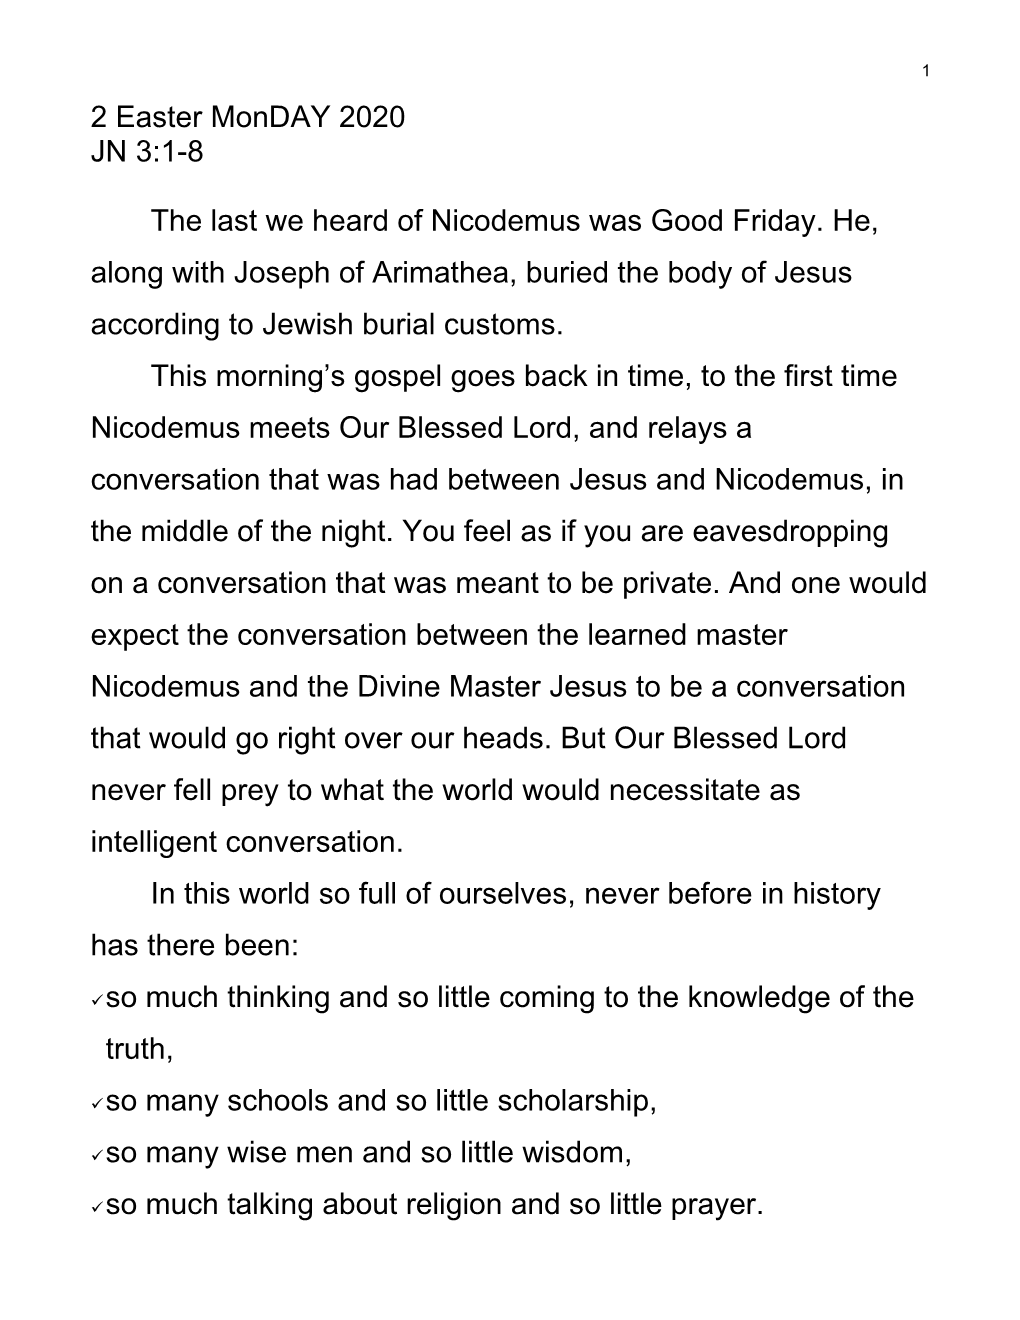 2 Easter Monday 2020 JN 3:1-8 the Last We Heard of Nicodemus Was